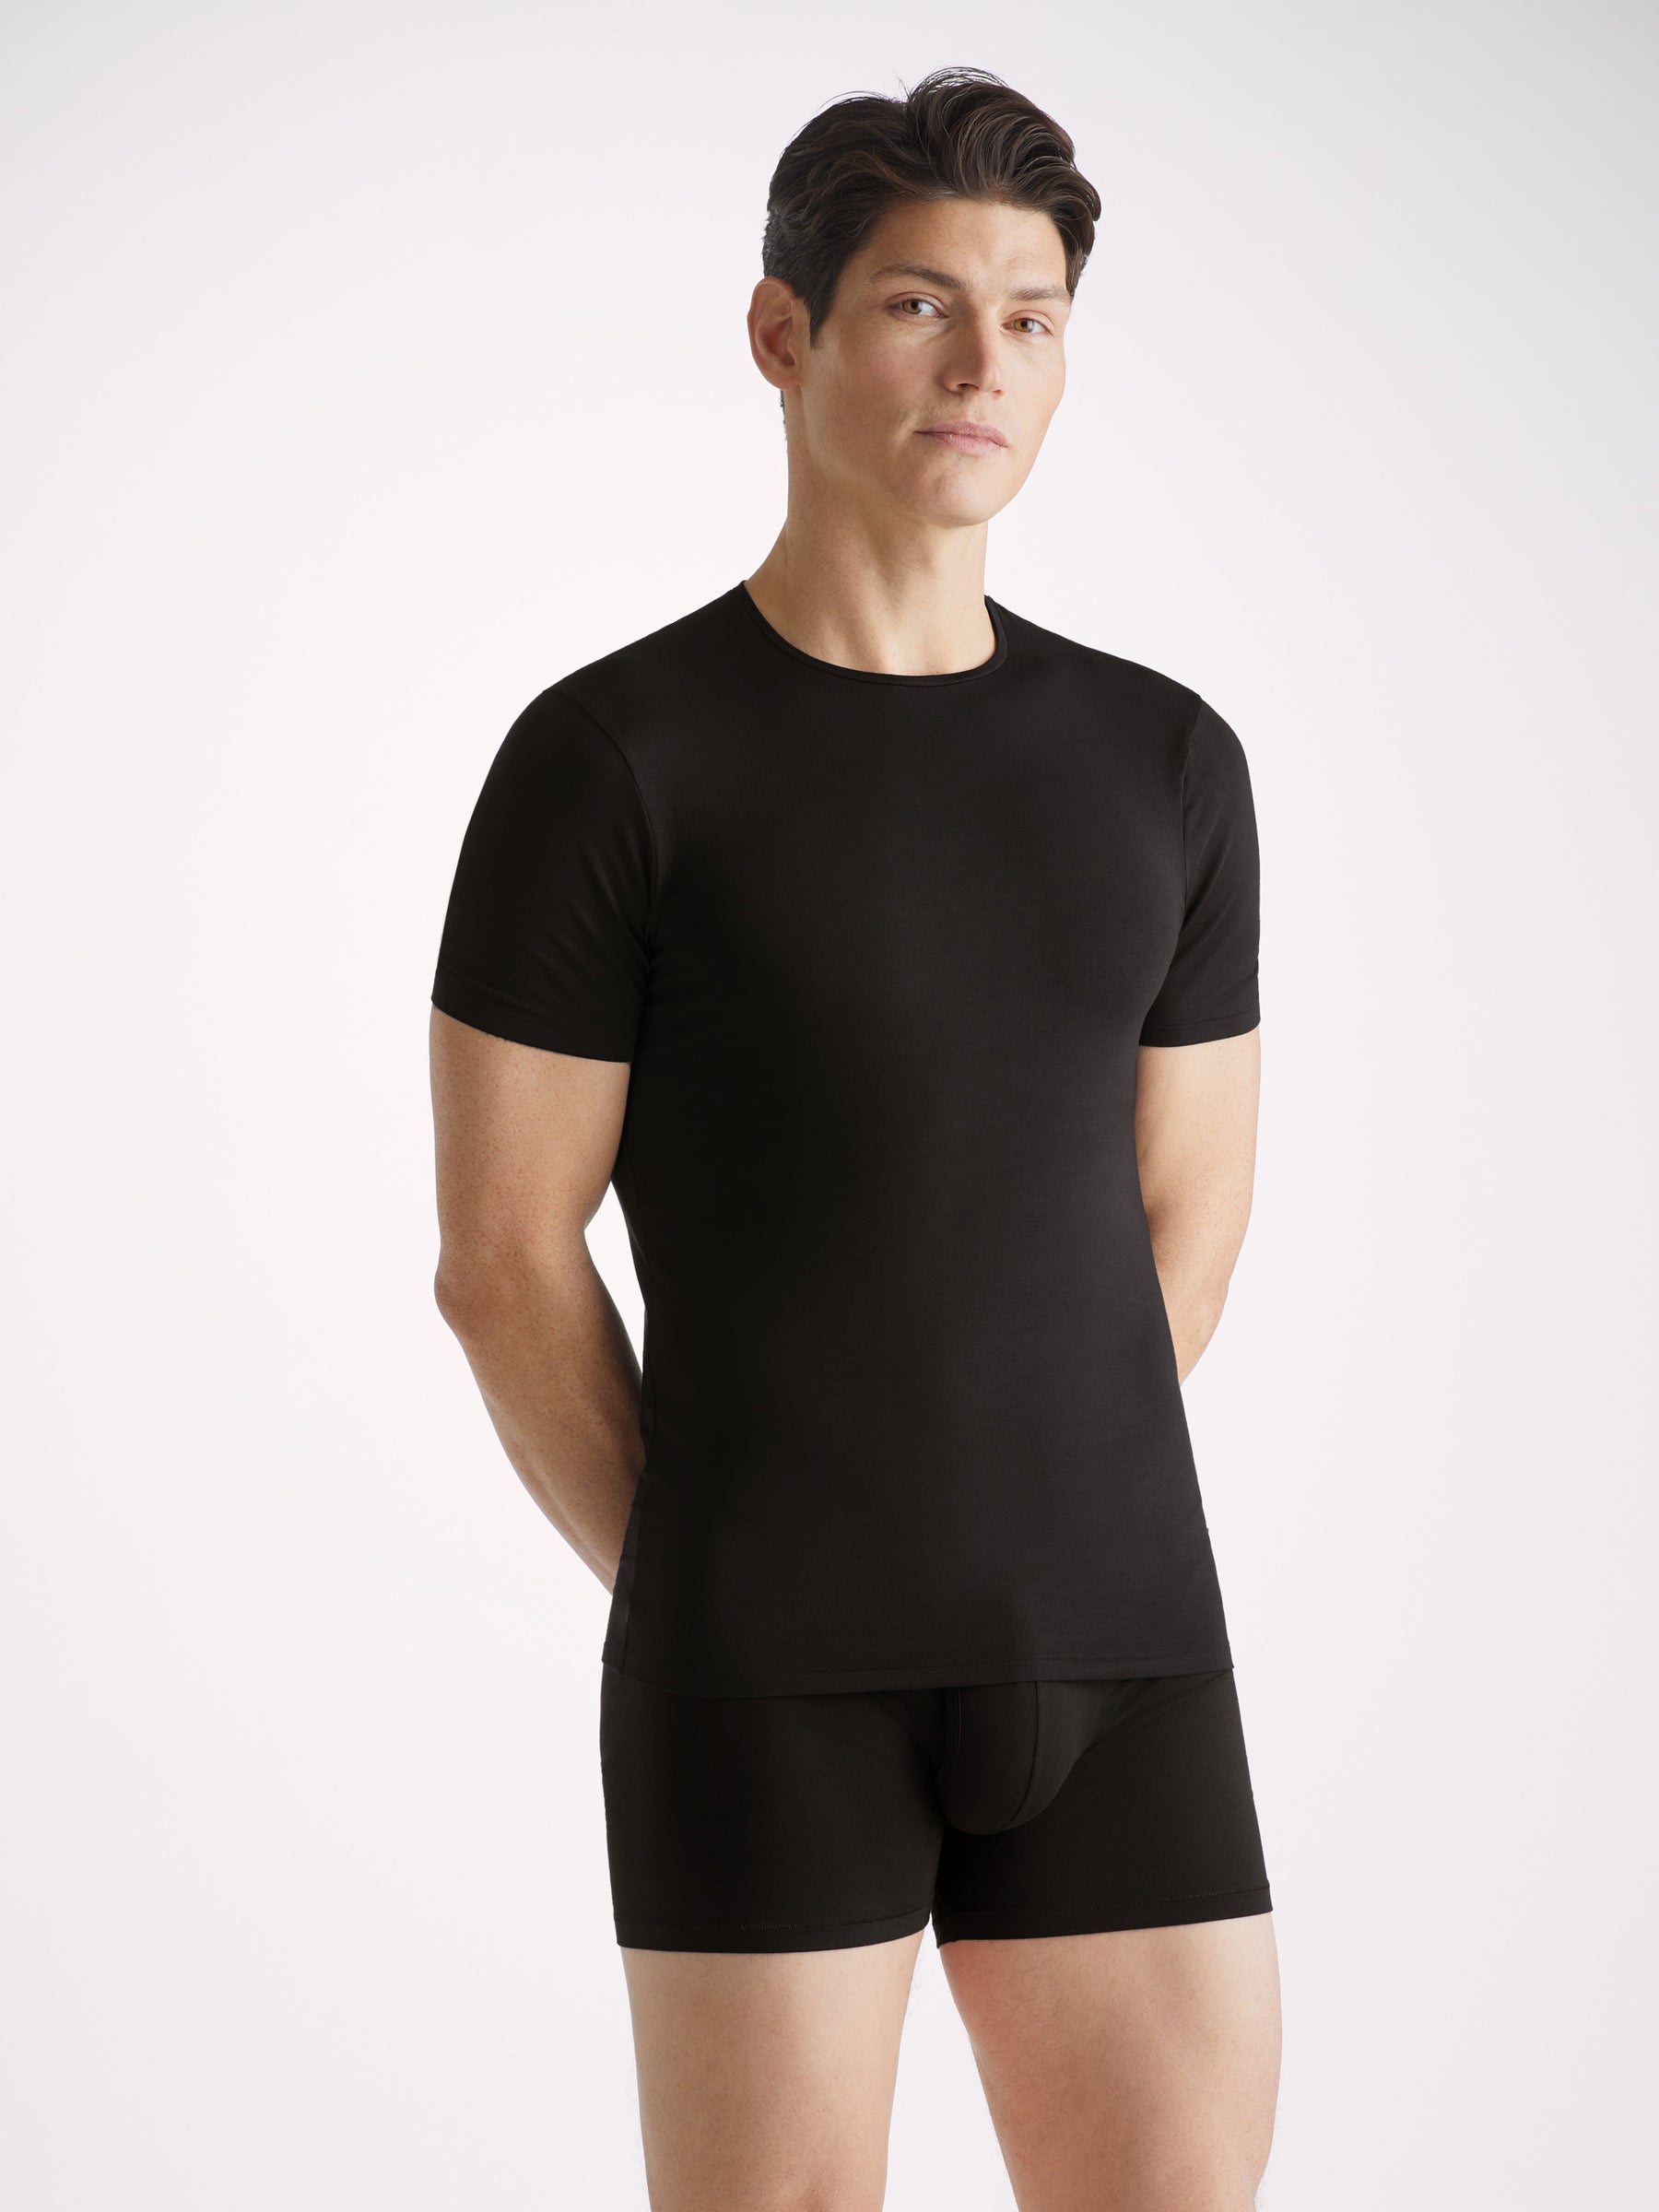 Men's Underwear T-Shirt Alex Micro Modal Stretch Black